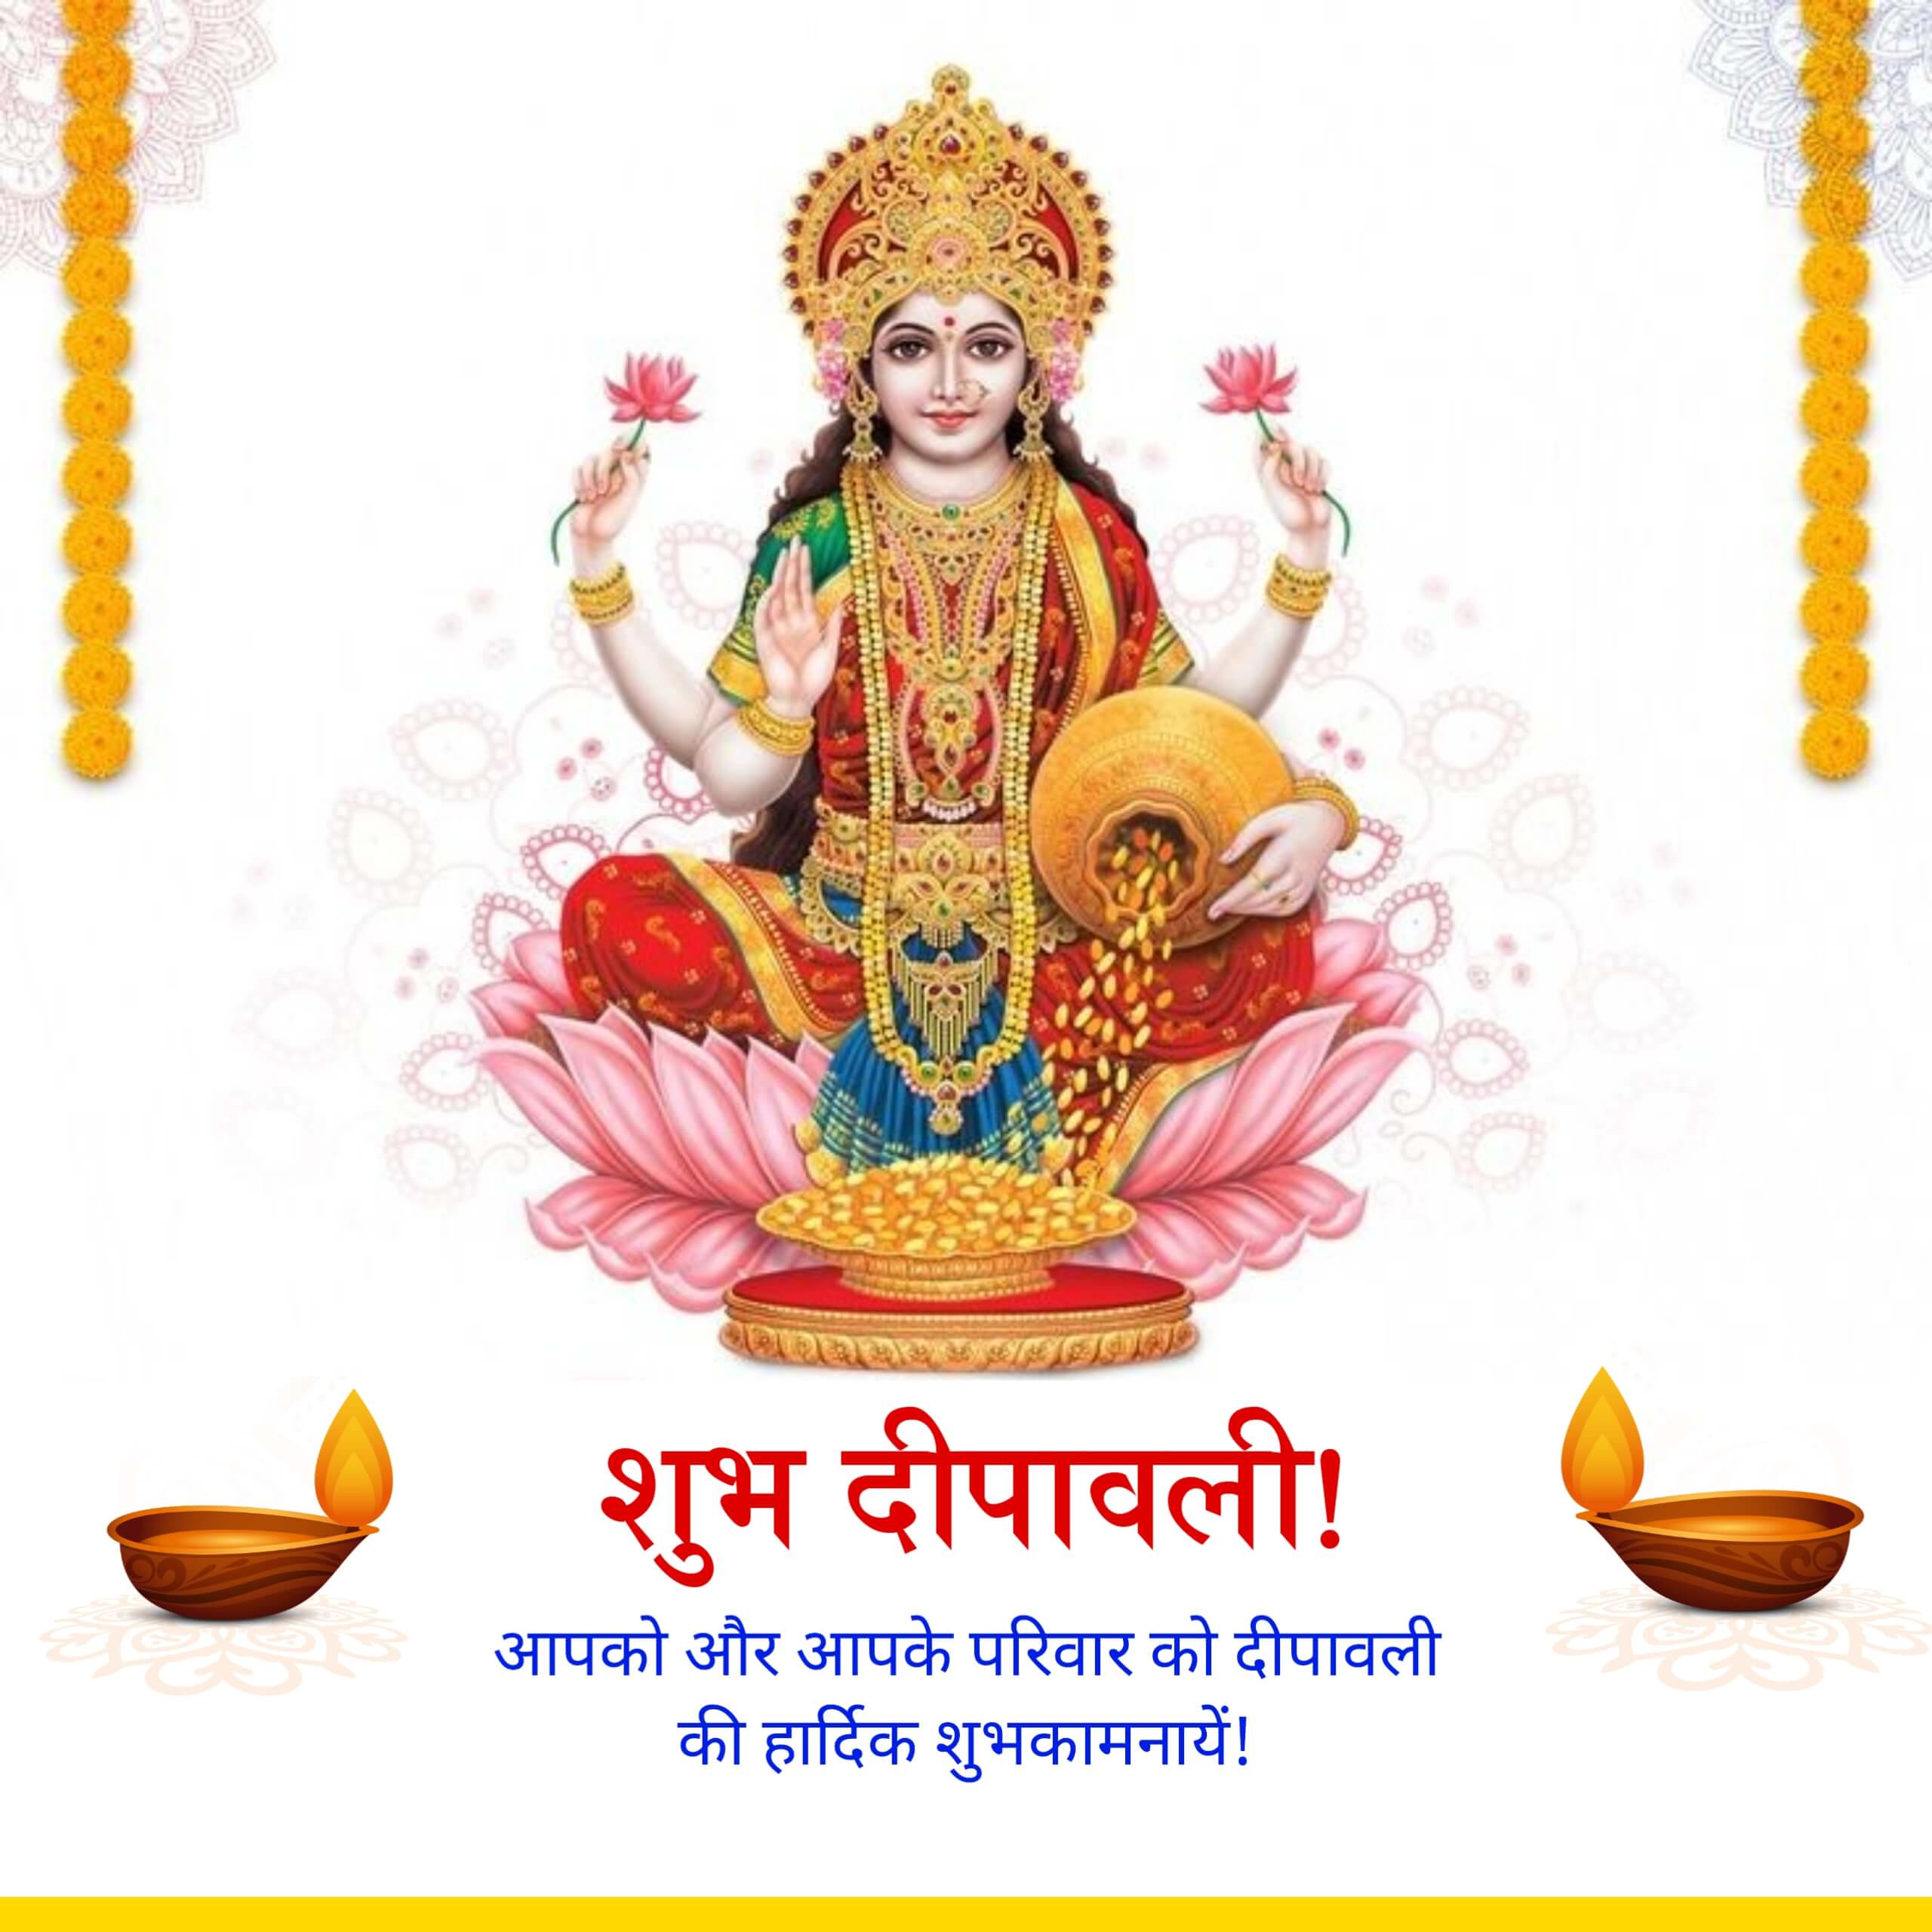 Diwali Wishes in Hindi Poster Image